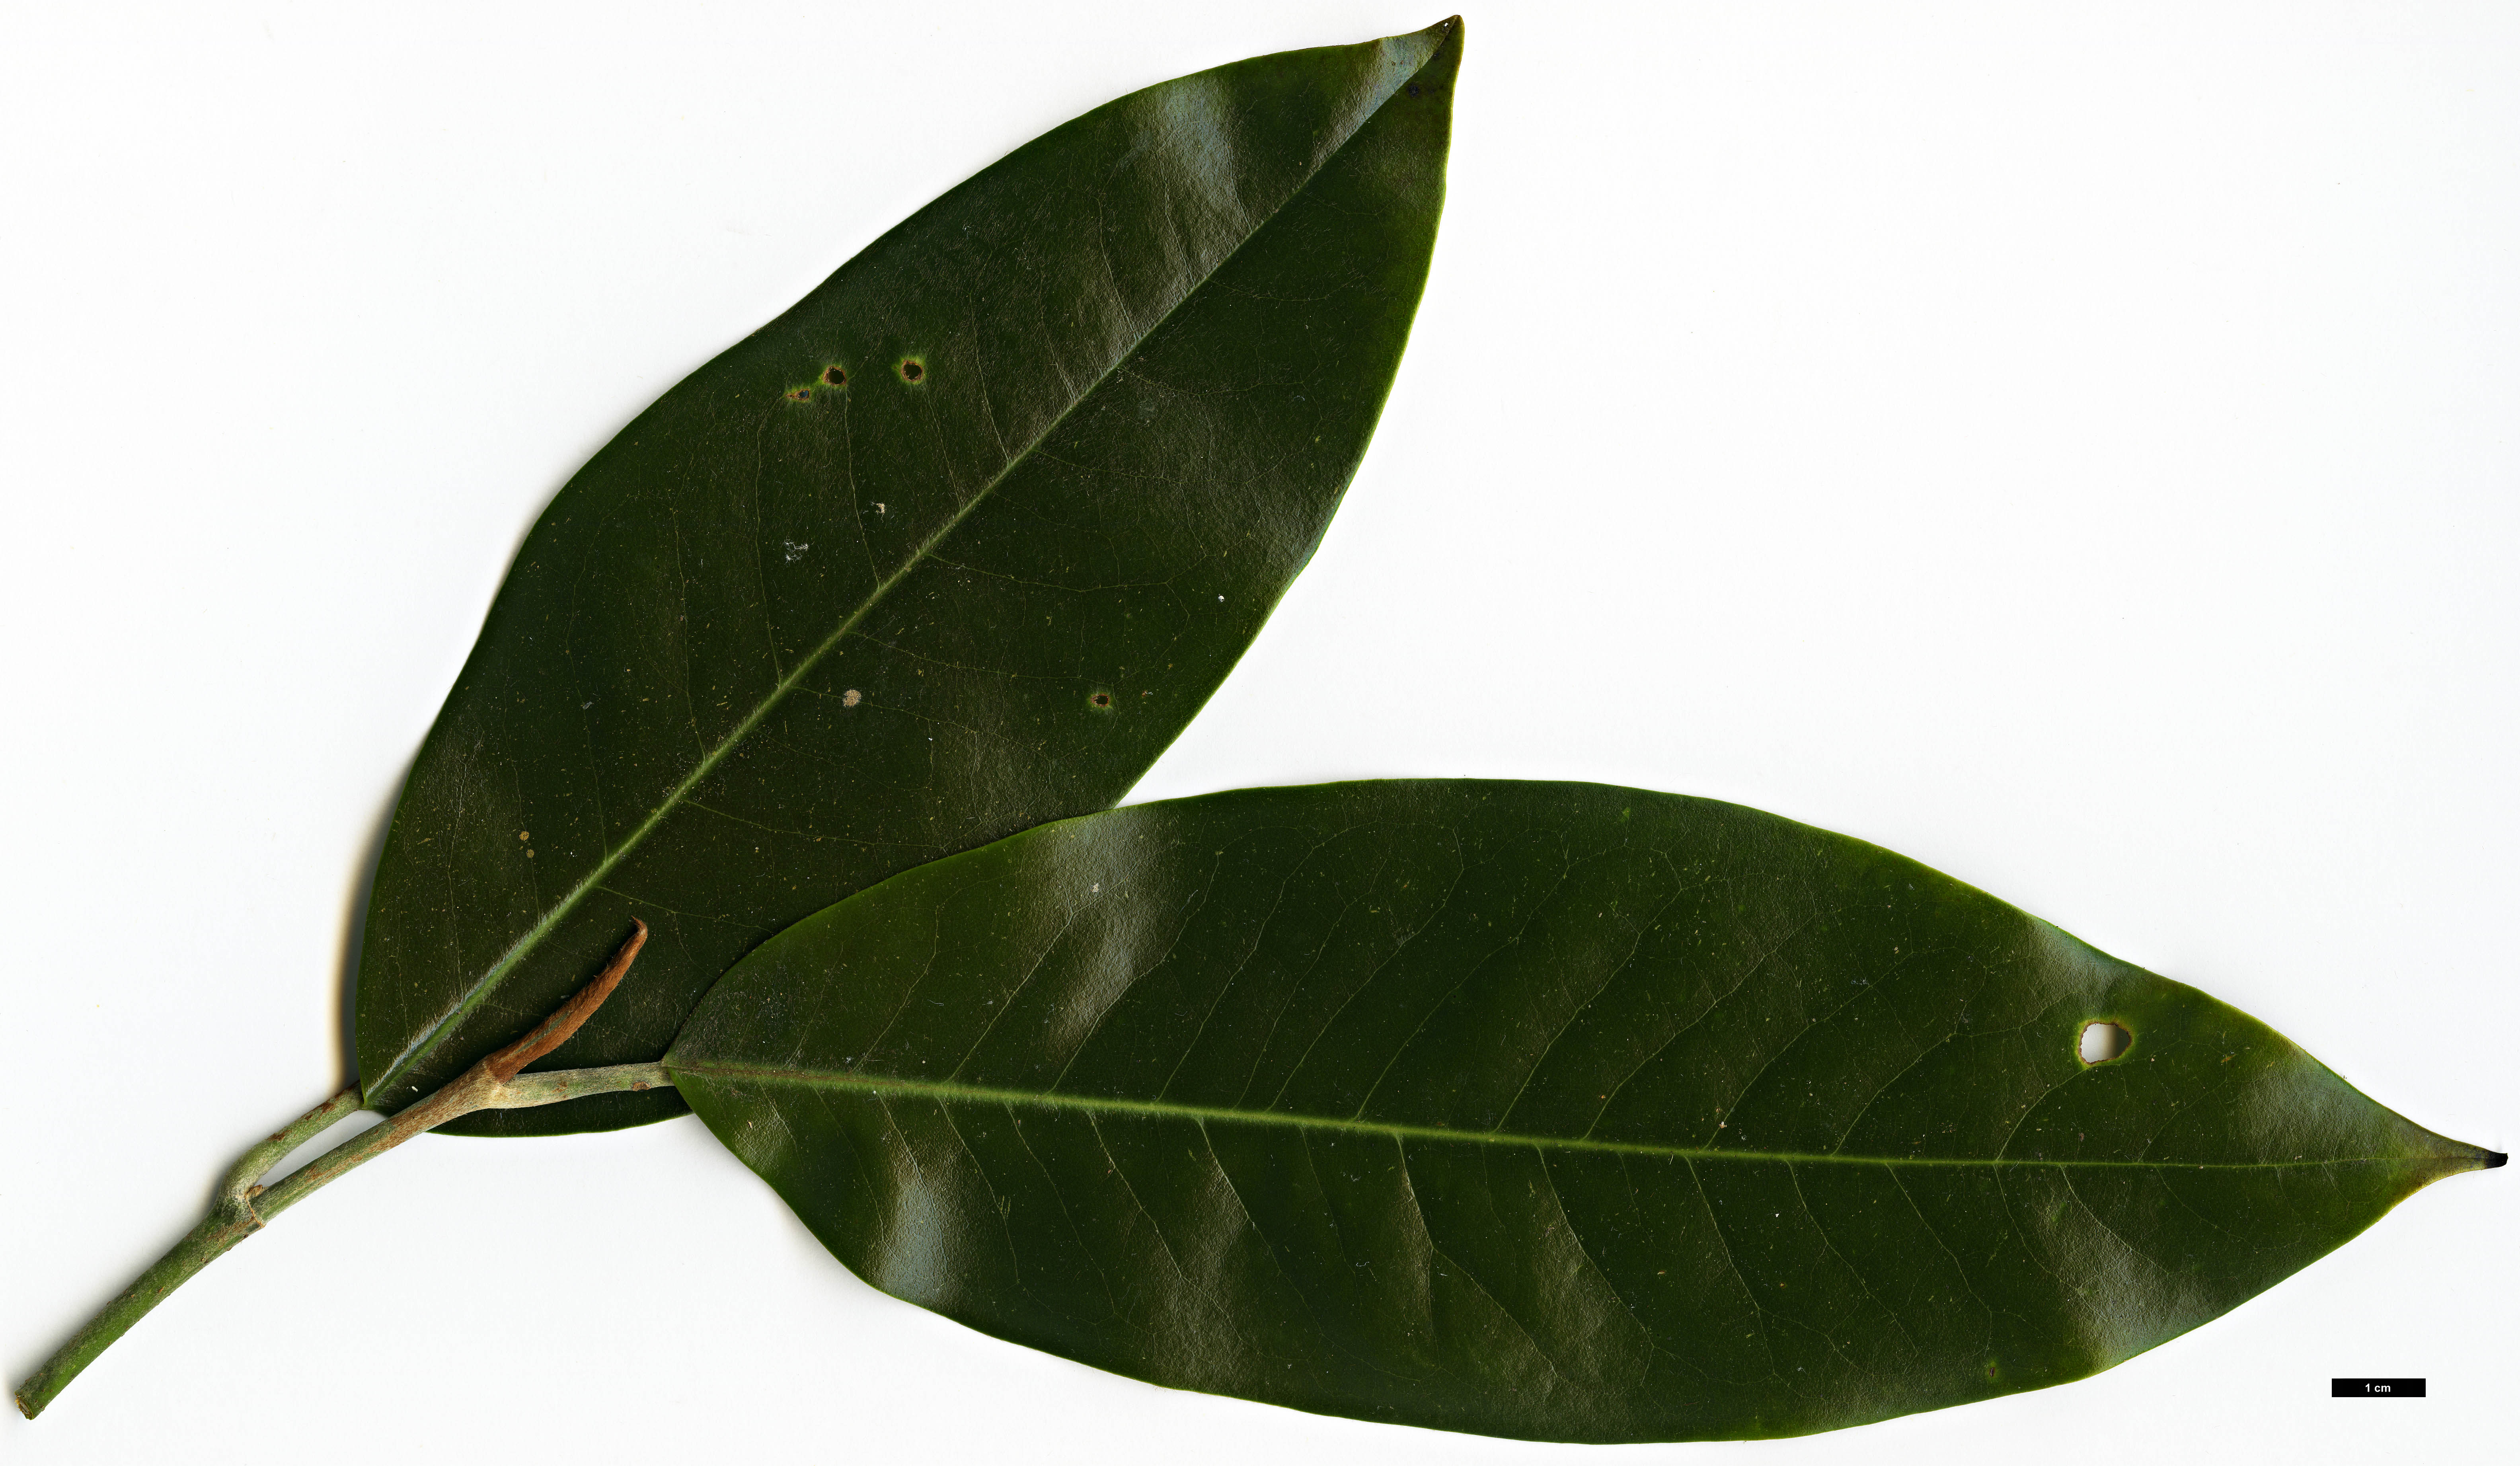 High resolution image: Family: Magnoliaceae - Genus: Magnolia - Taxon: foveolata